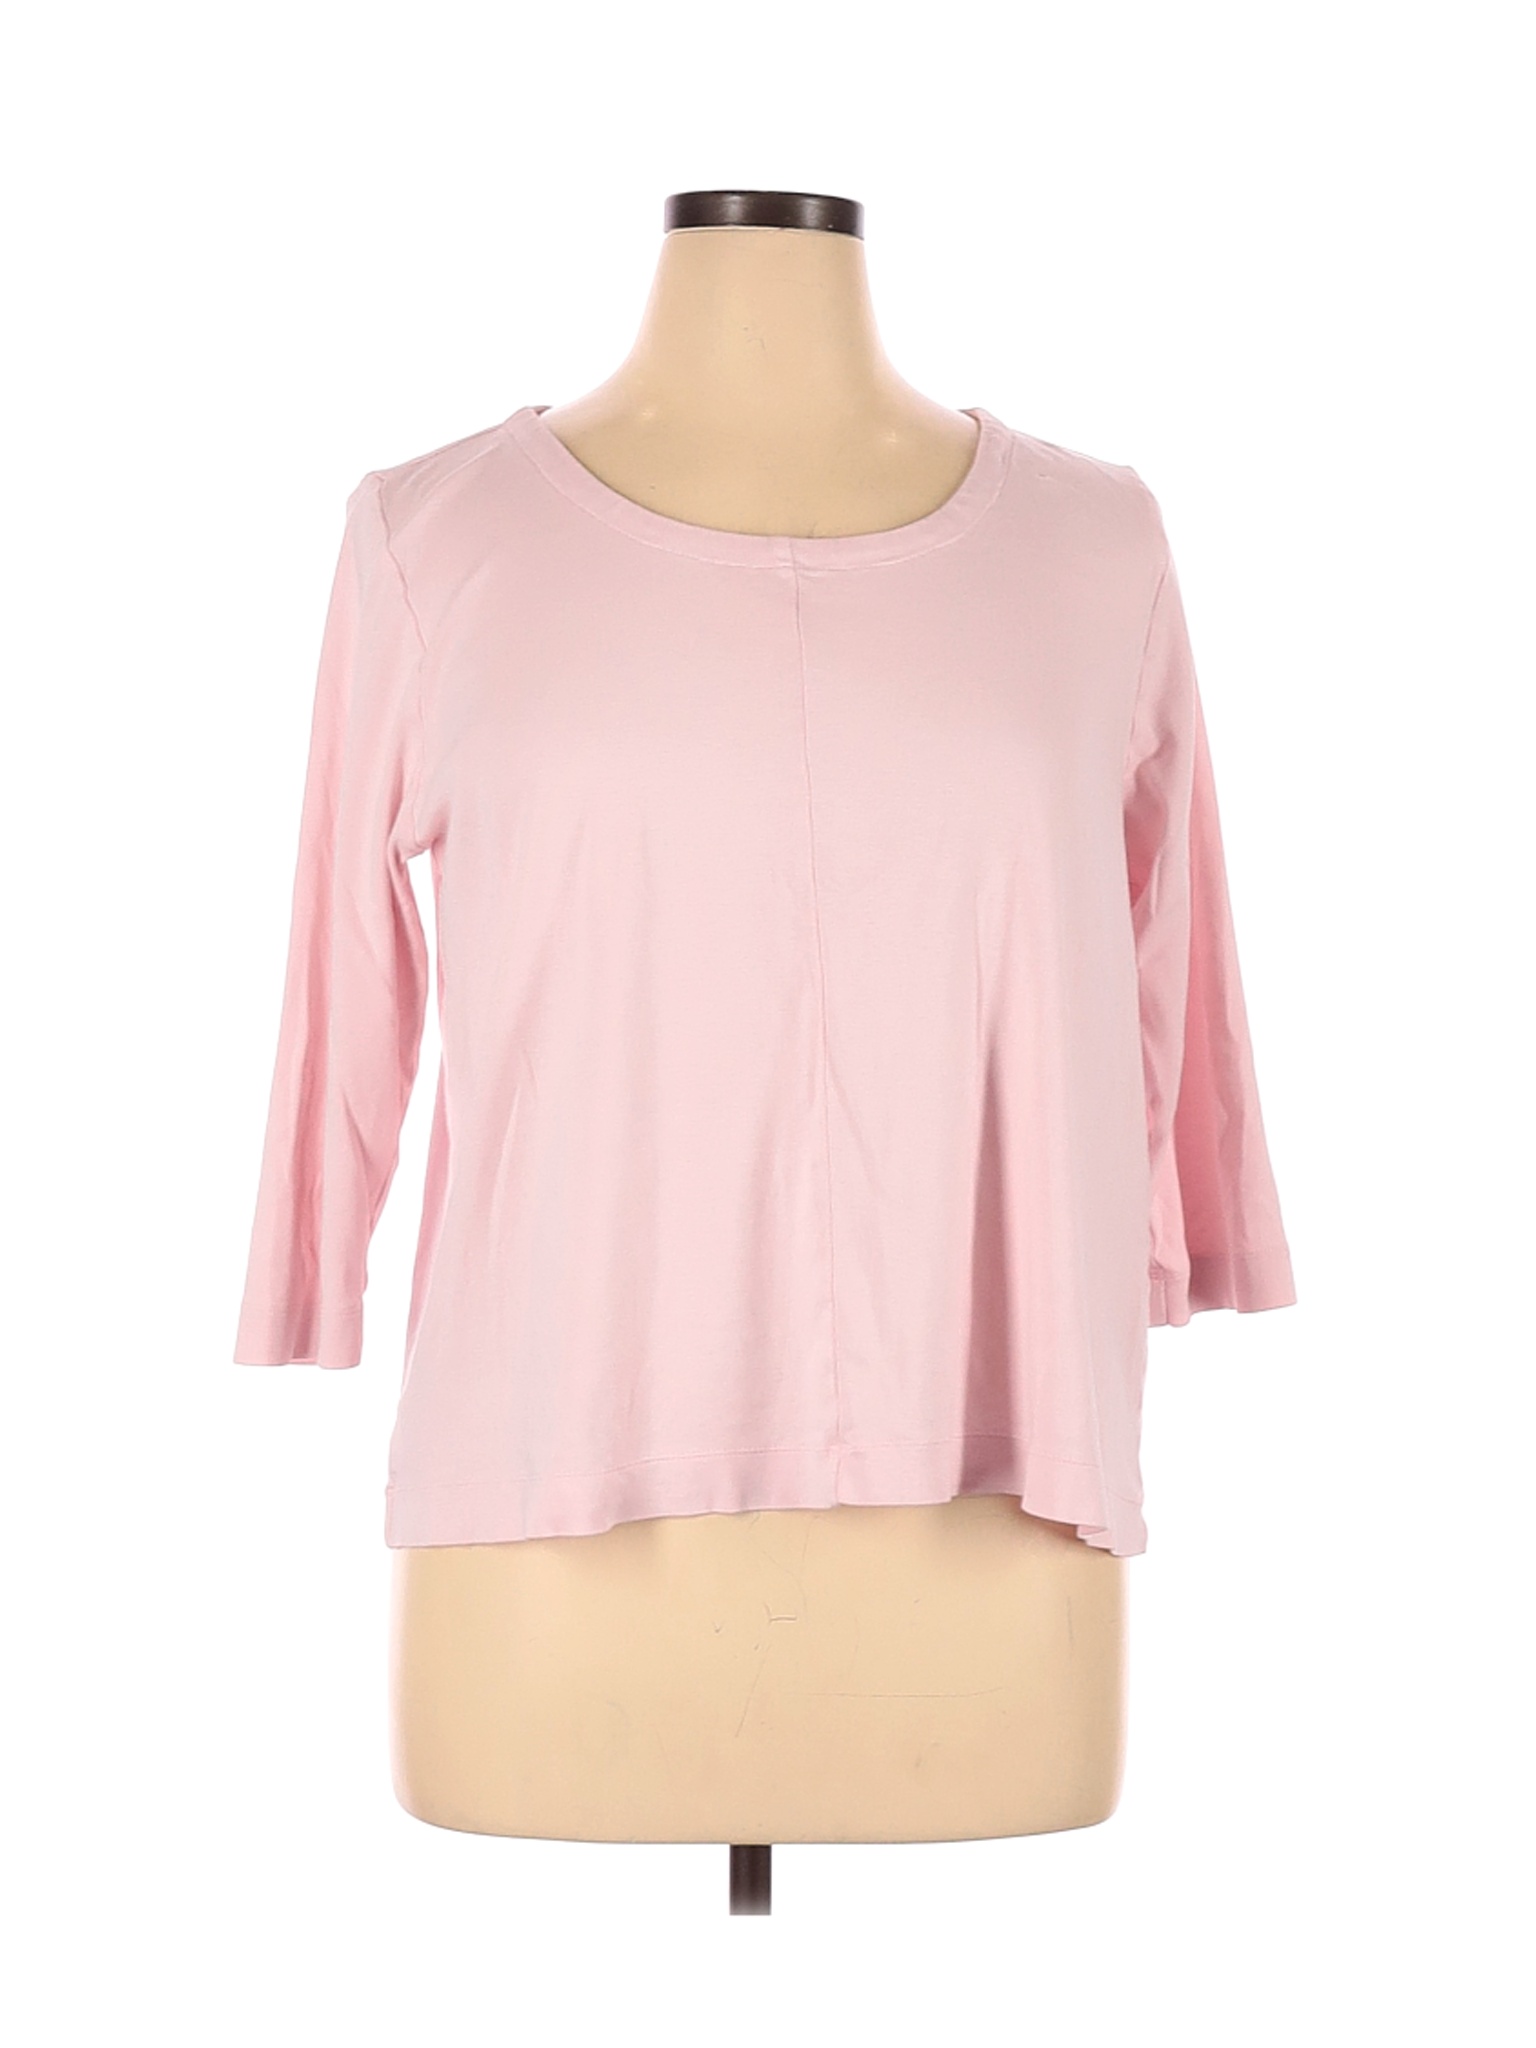 J.Jill Women Pink 3/4 Sleeve T-Shirt XL Petites | eBay